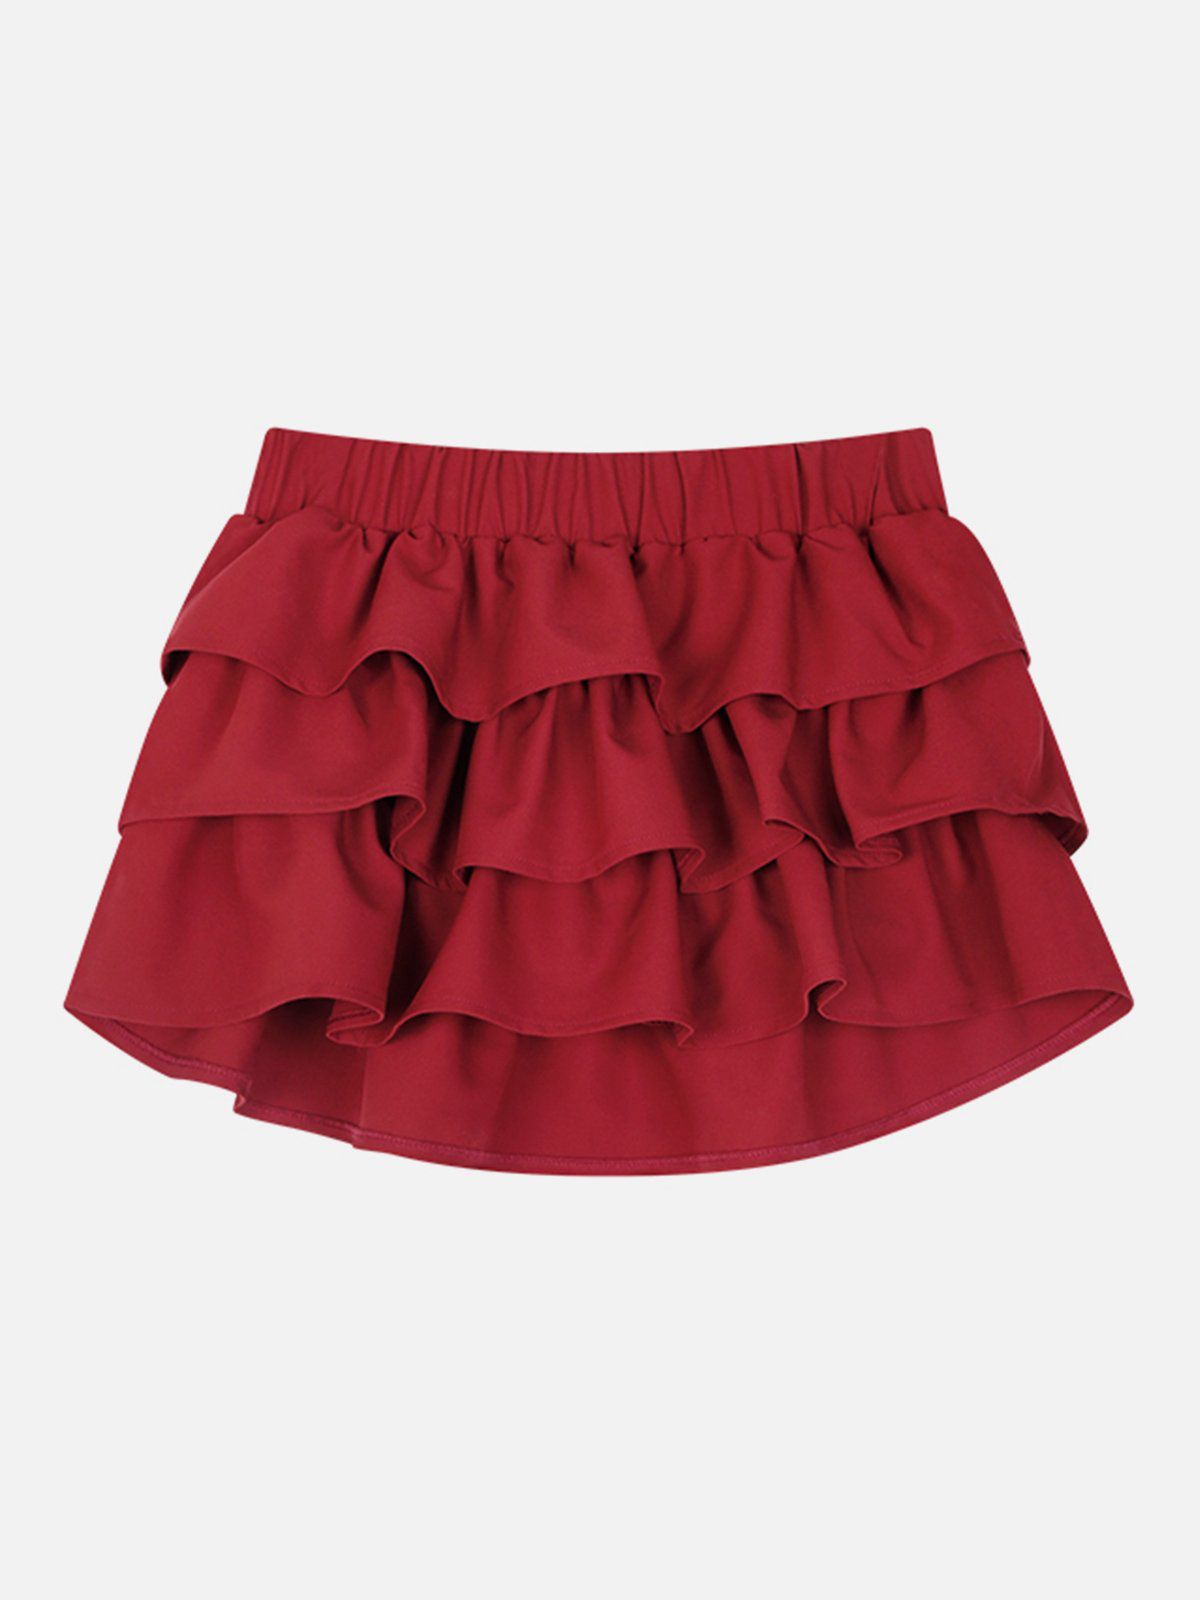 Aelfric Eden Cherry Red Tiered Skirt